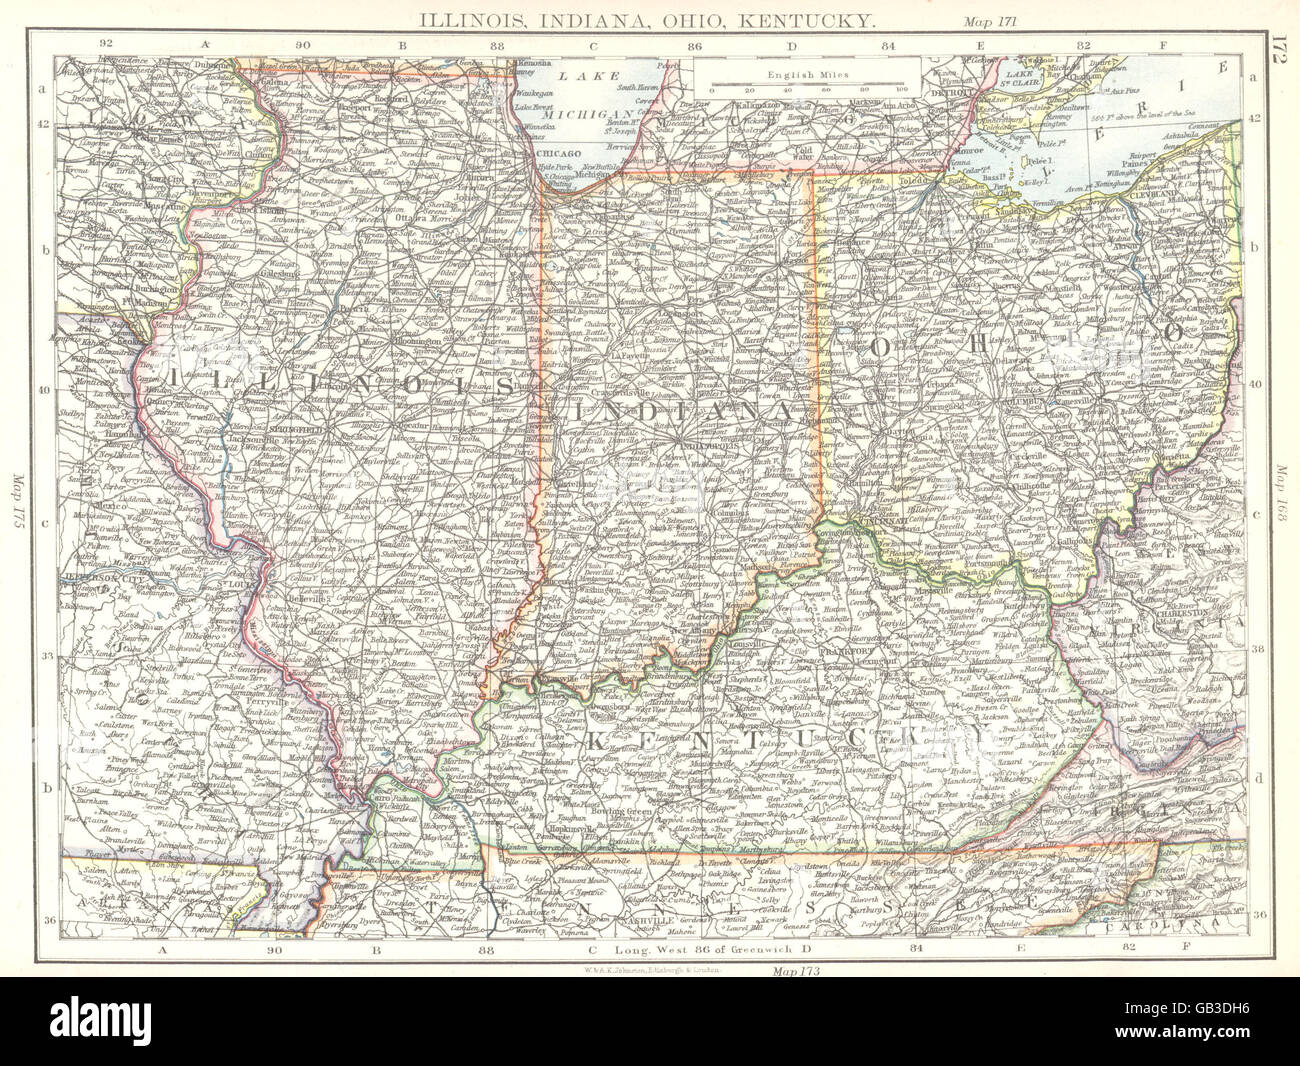 USA MID WEST: Illinois, Indiana, Ohio, Kentucky, 1897 antique map Stock Photo